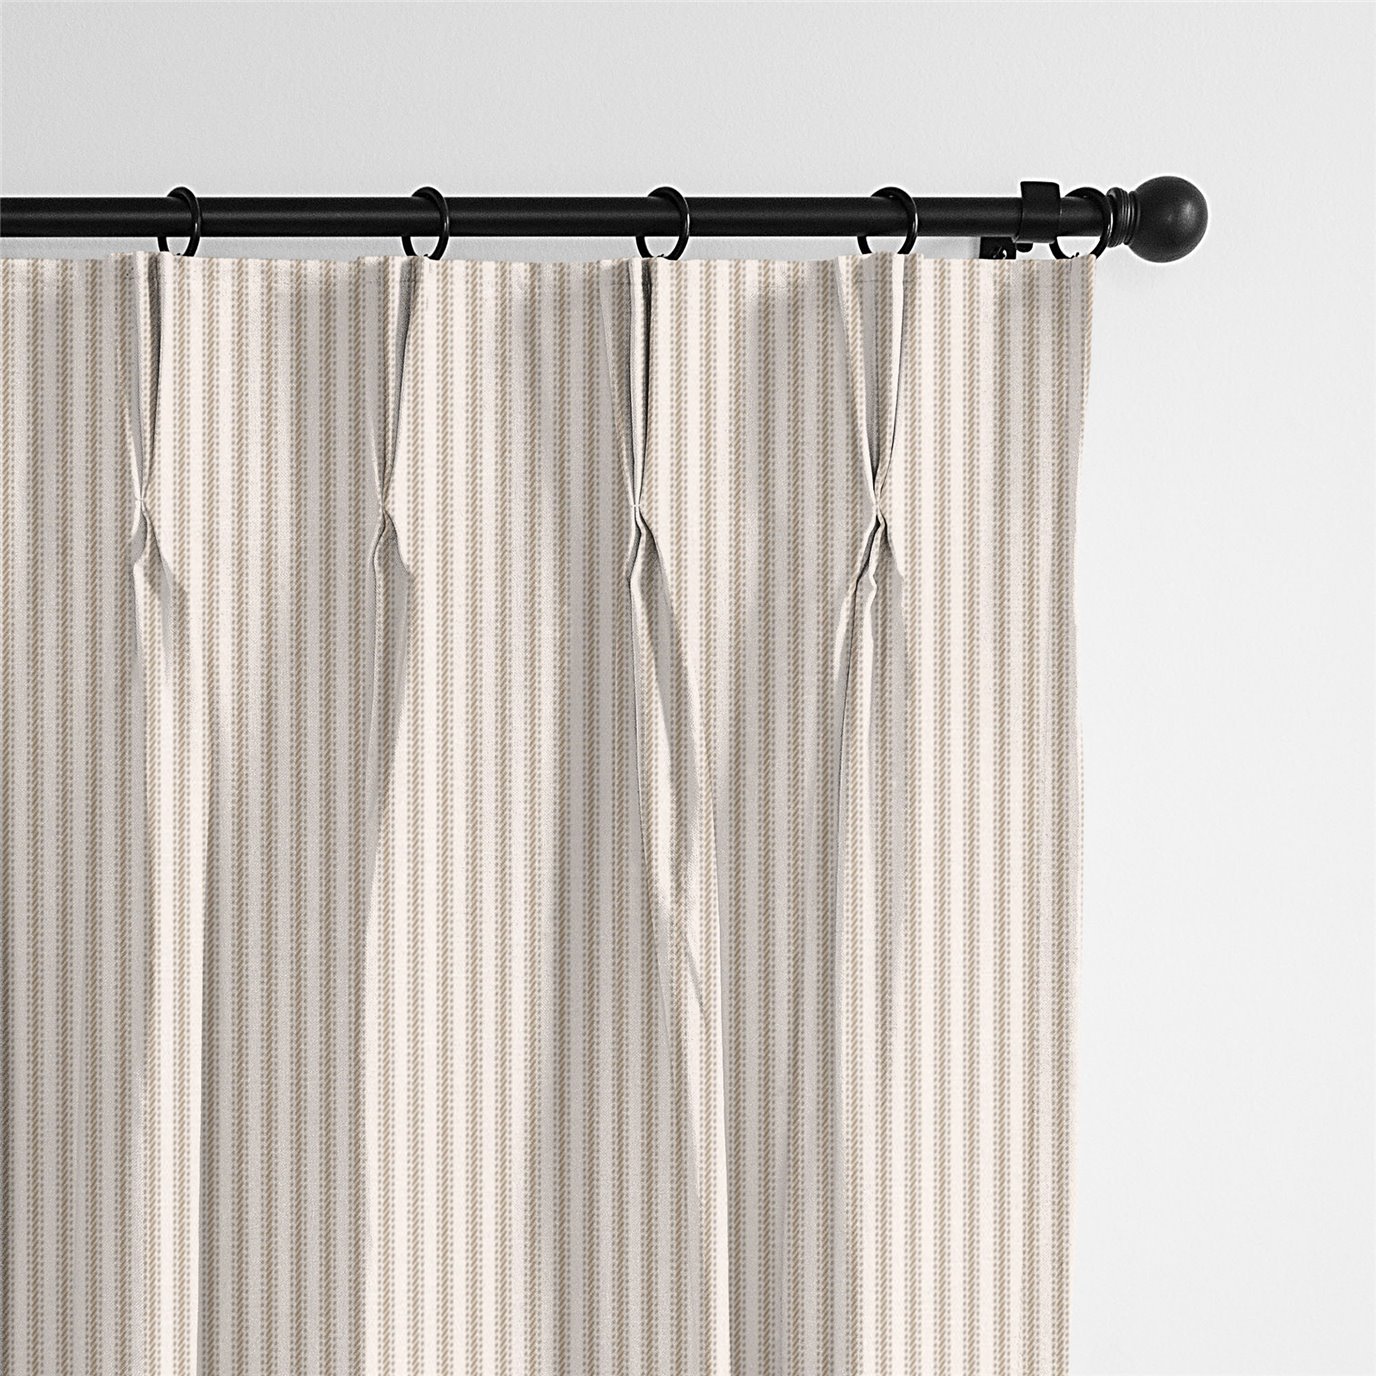 Cruz Ticking Stripes Taupe/Ivory Pinch Pleat Drapery Panel - Pair - Size 20"x84"